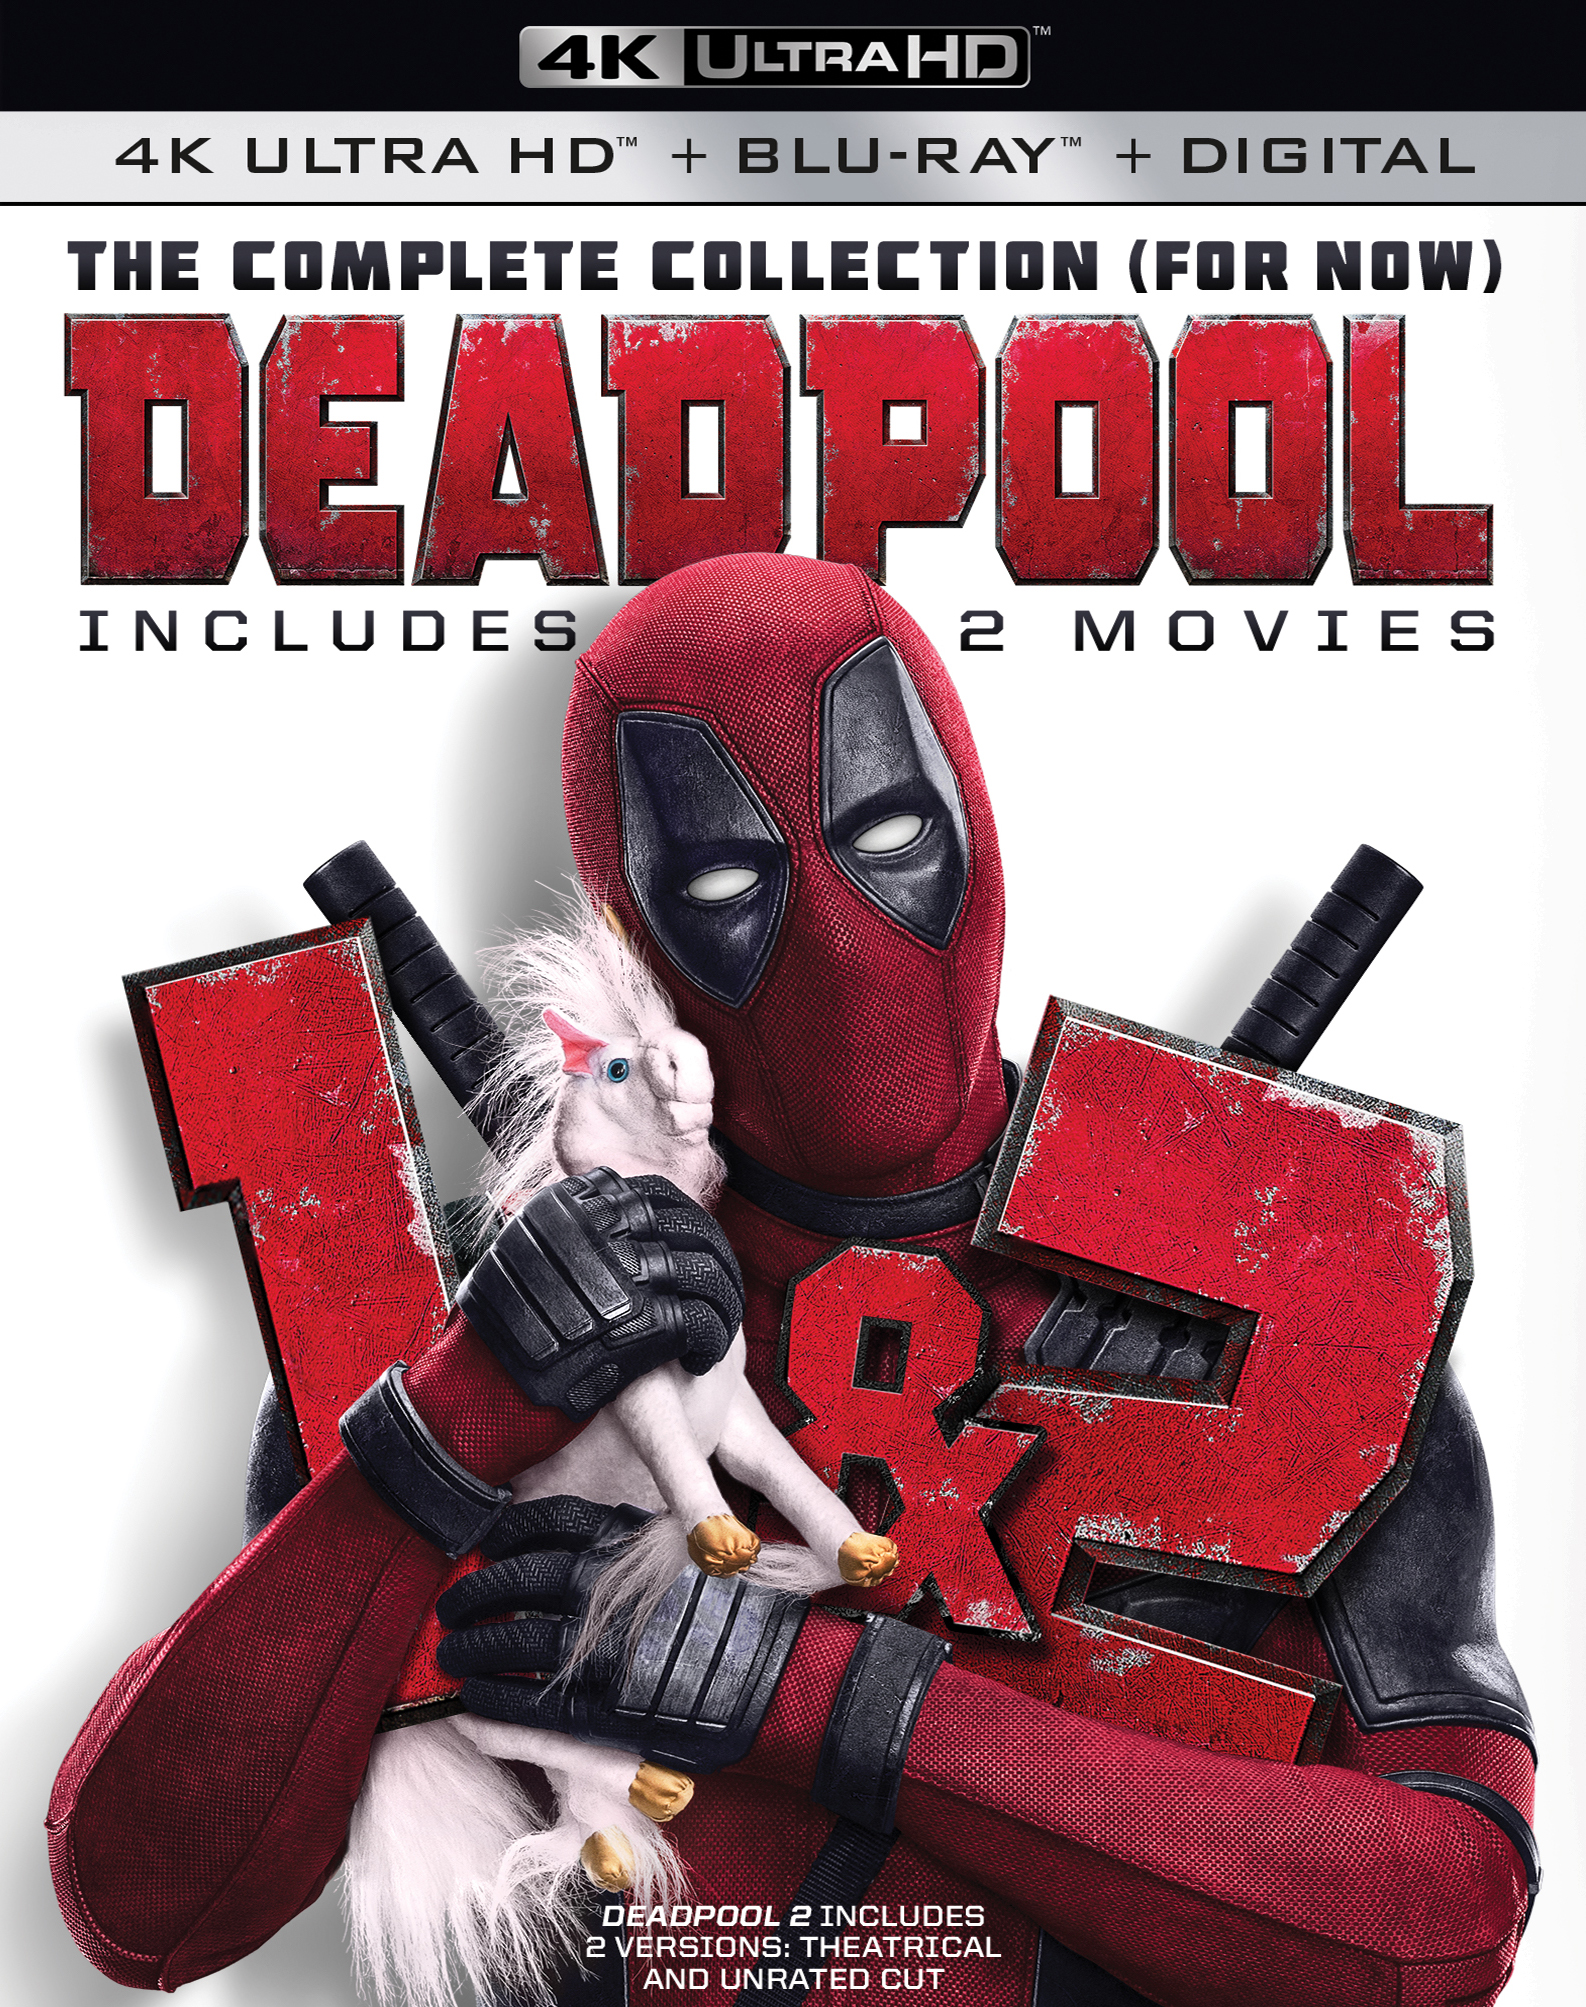 Deadpool 2 [4K Ultra HD Blu-ray]